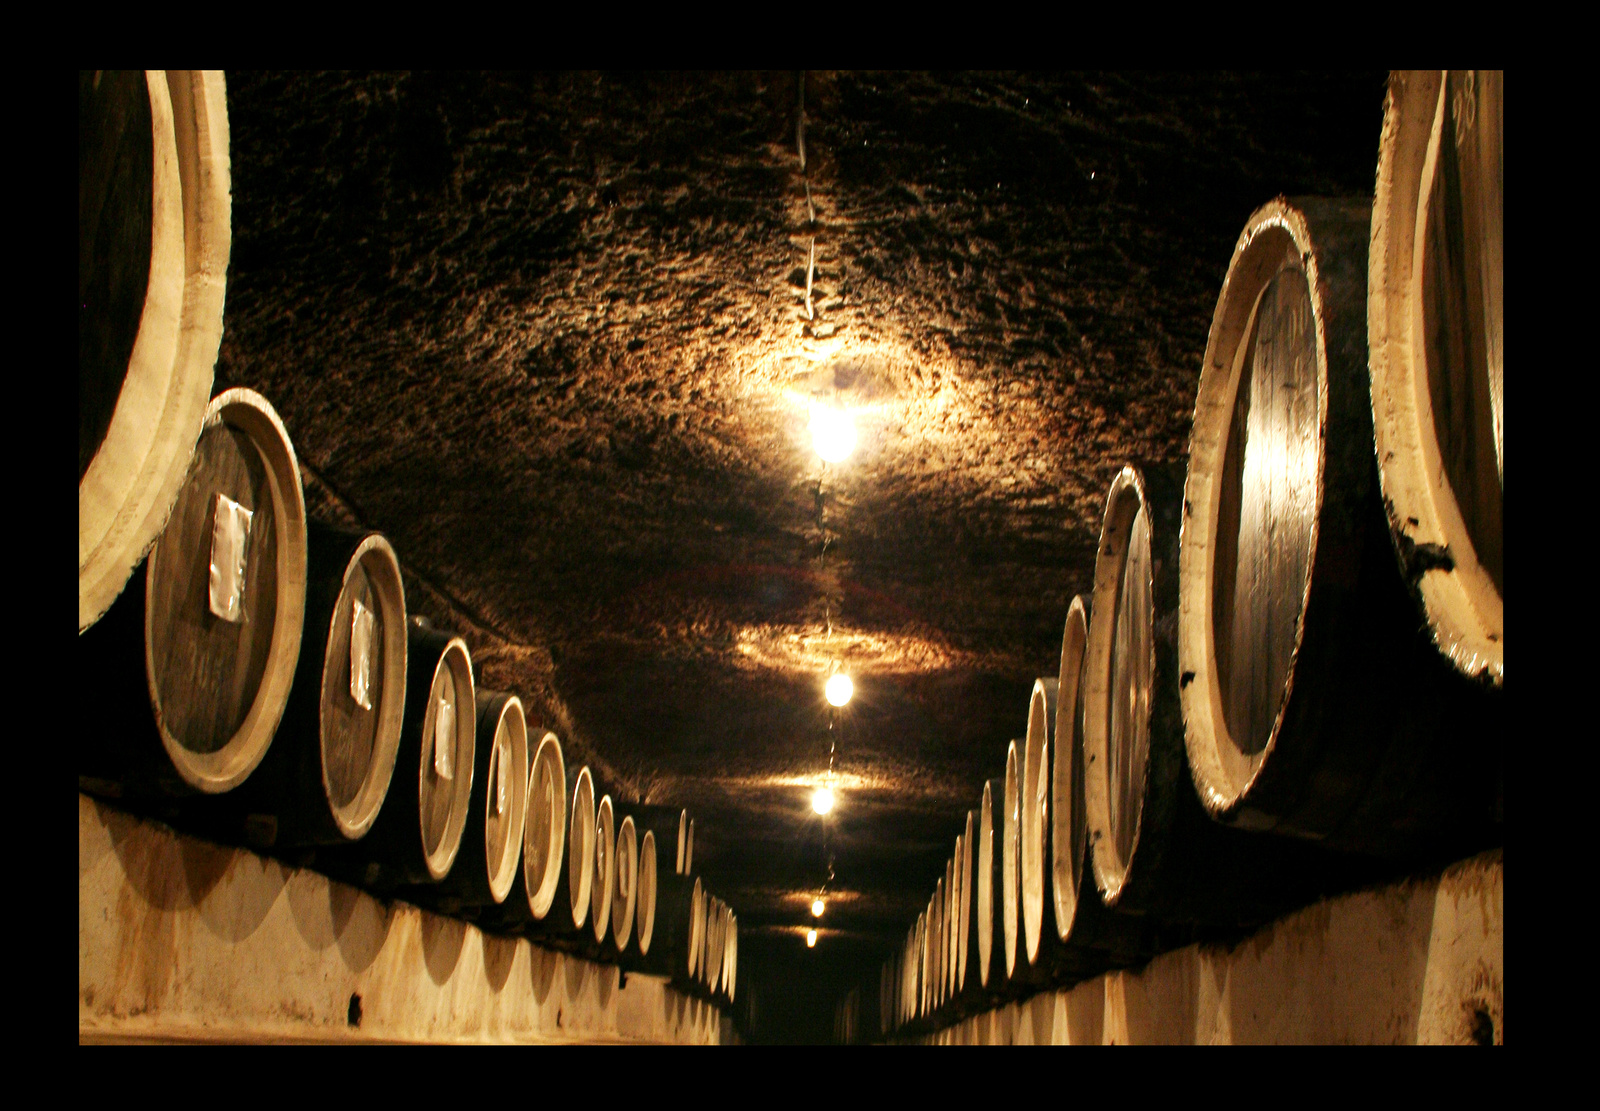 Borospince-Wine cellar